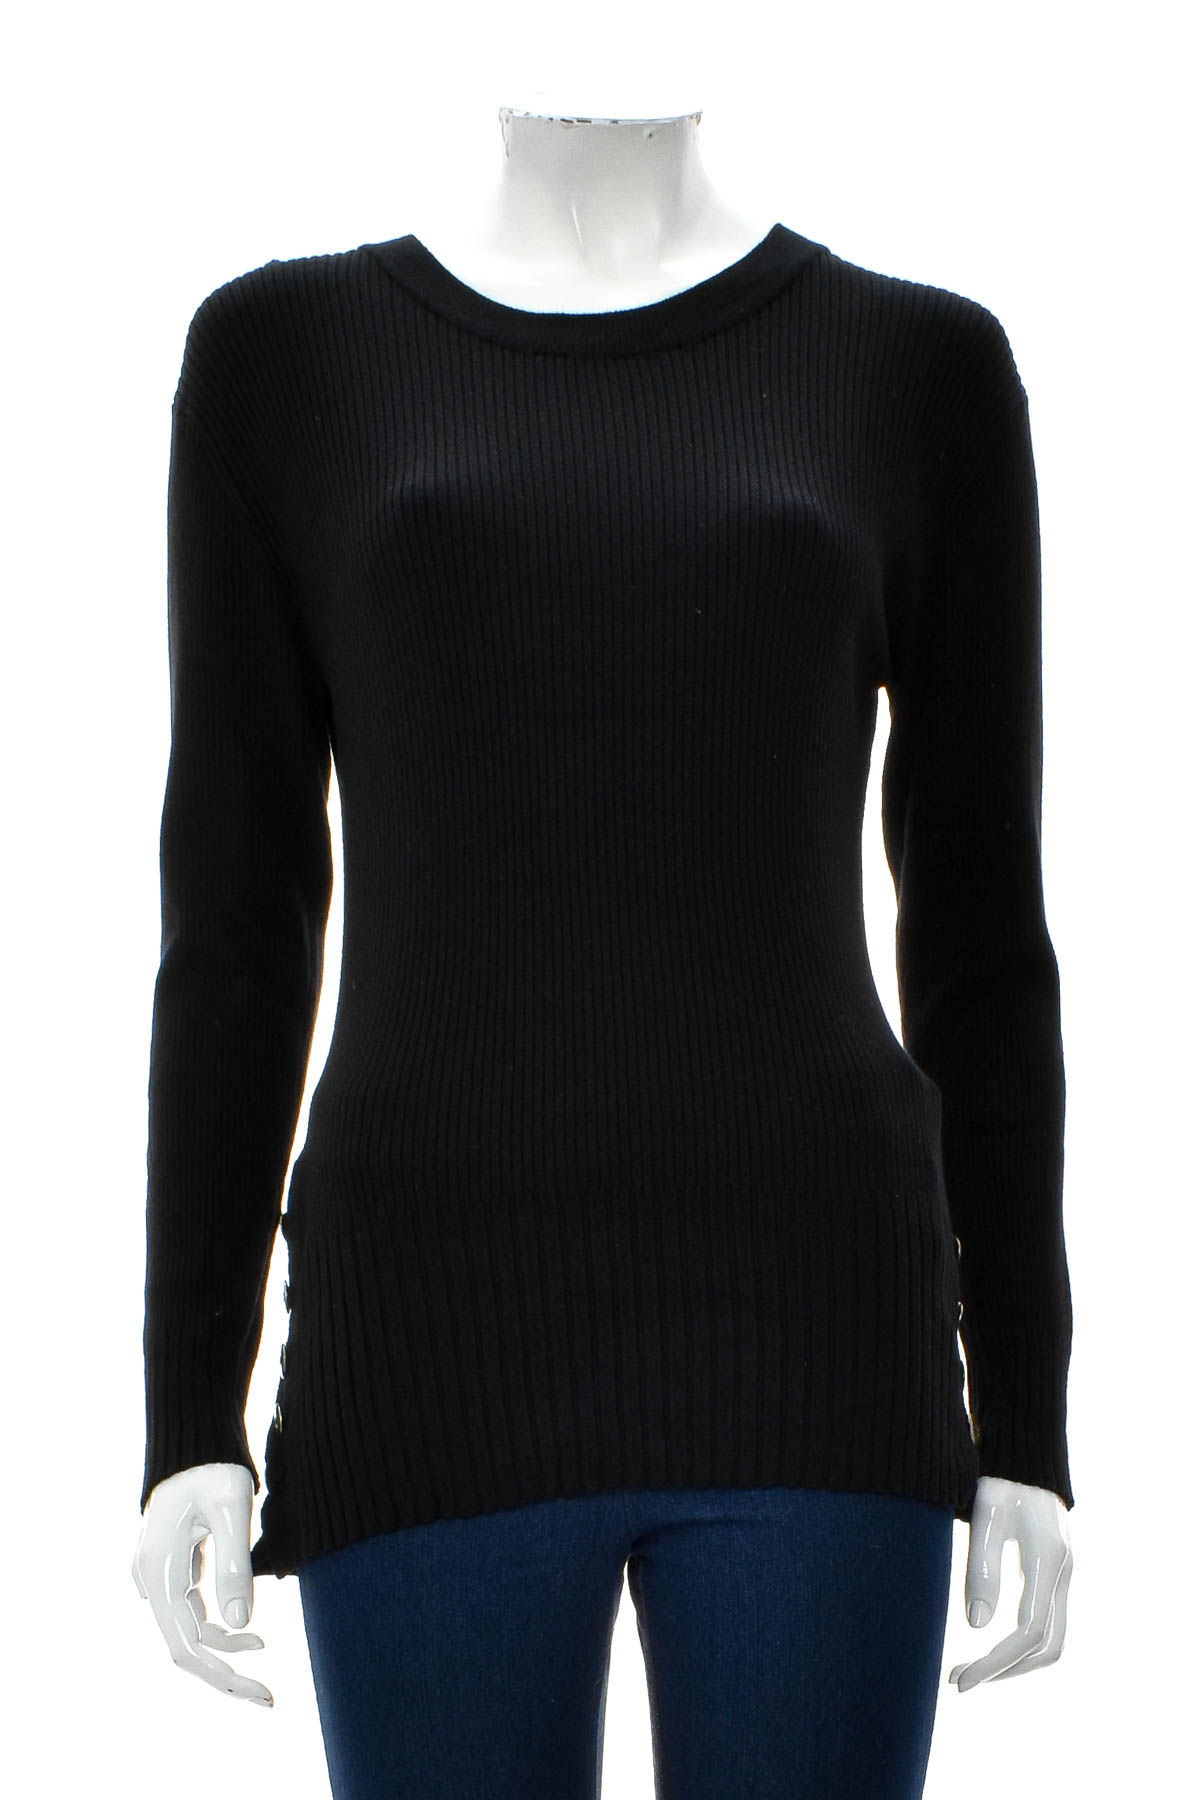 Women's sweater - Lily Morgan - 0